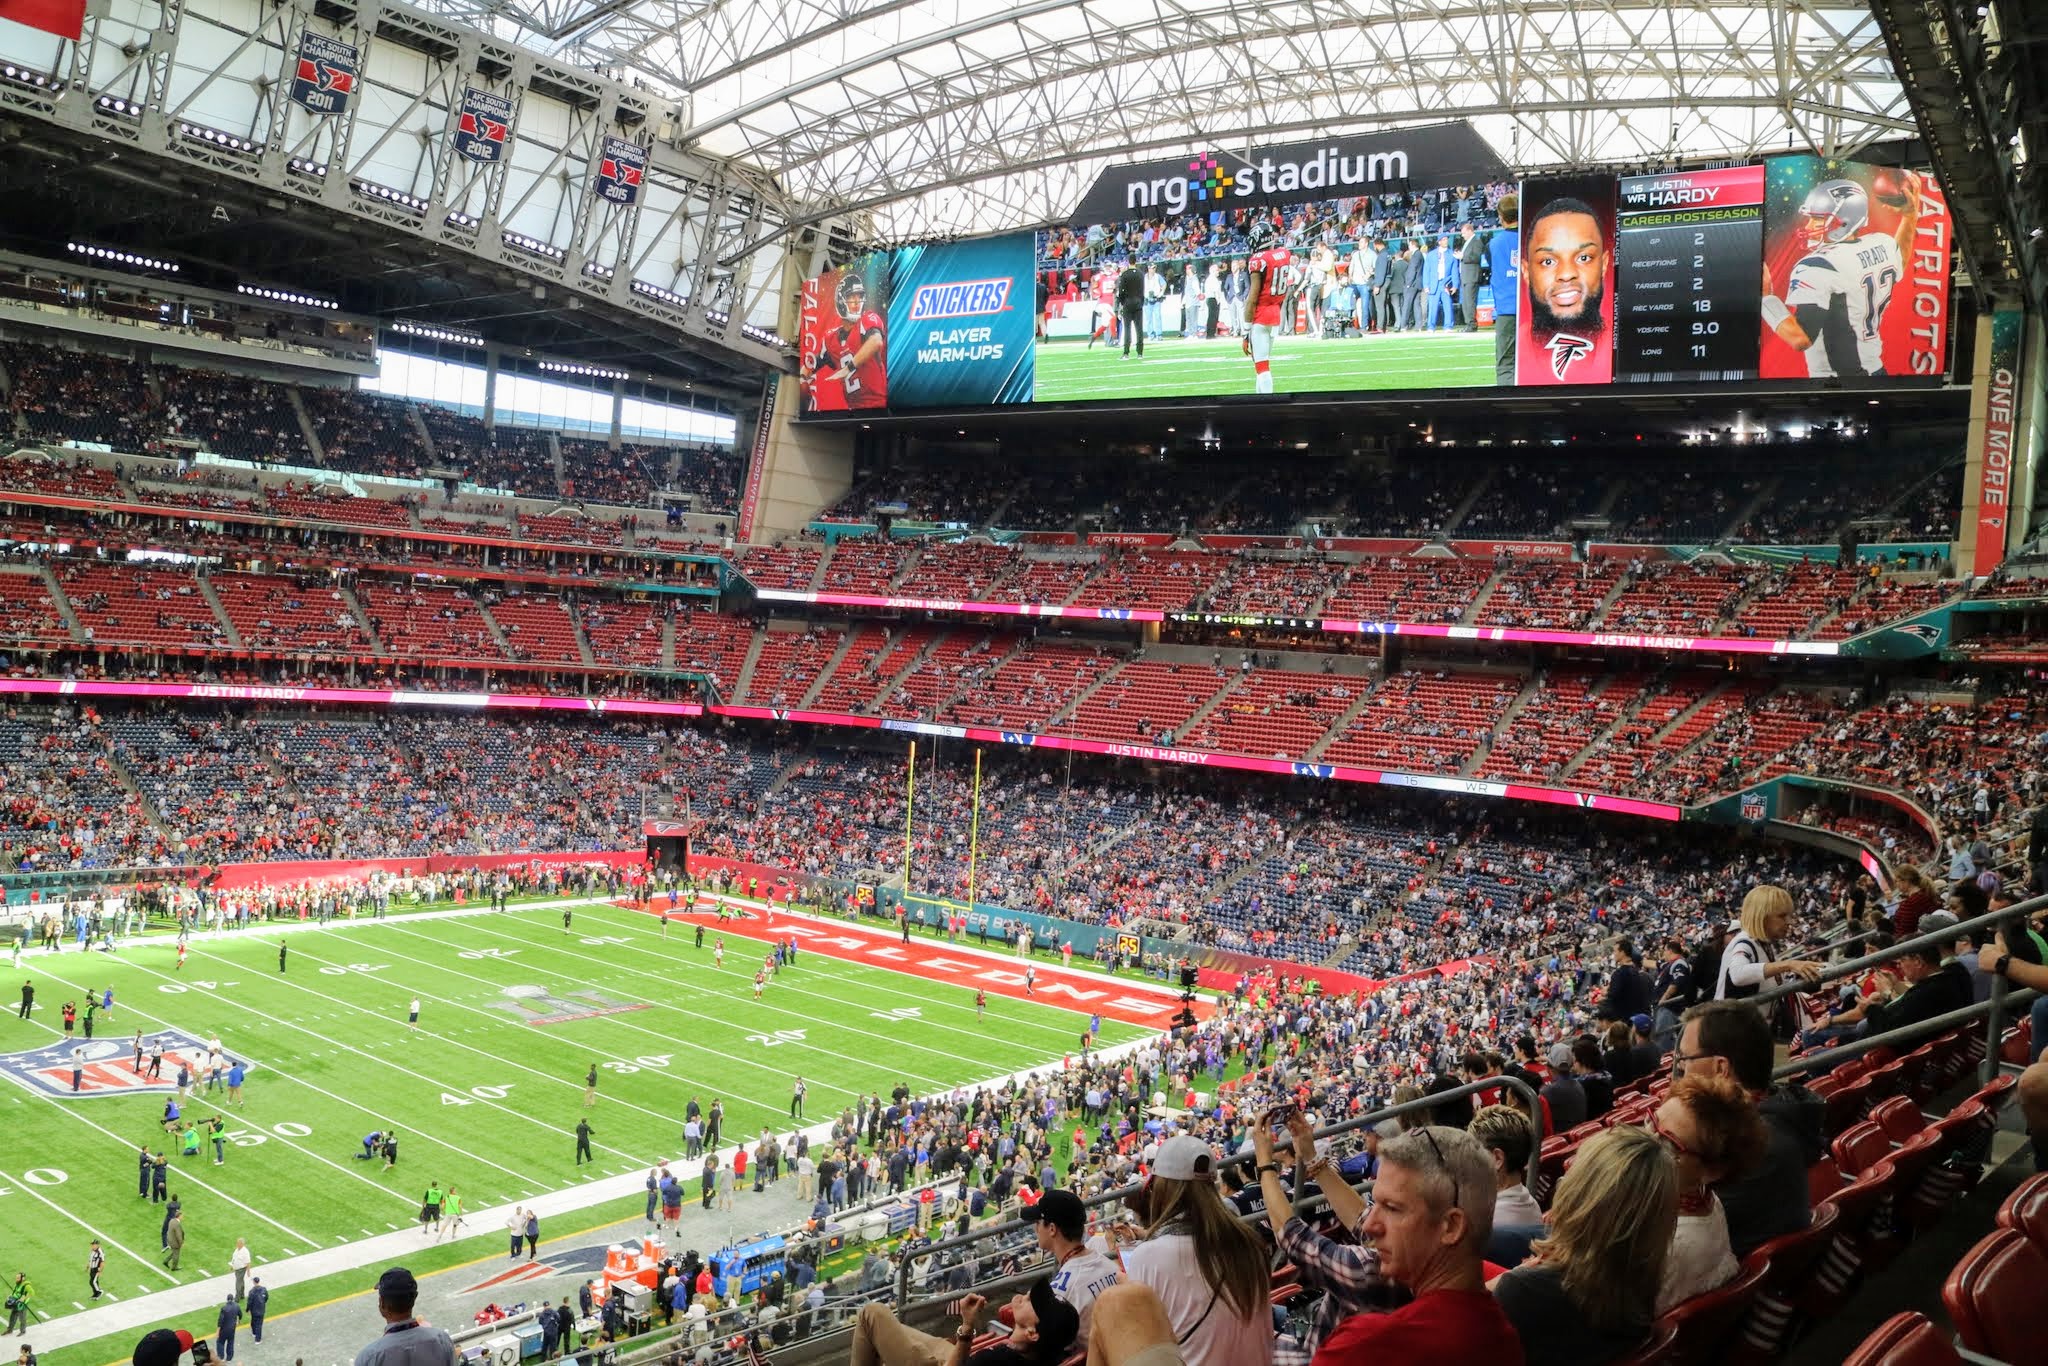 The Martha Stewart Blog Blog Archive Attending the Super Bowl in Houston